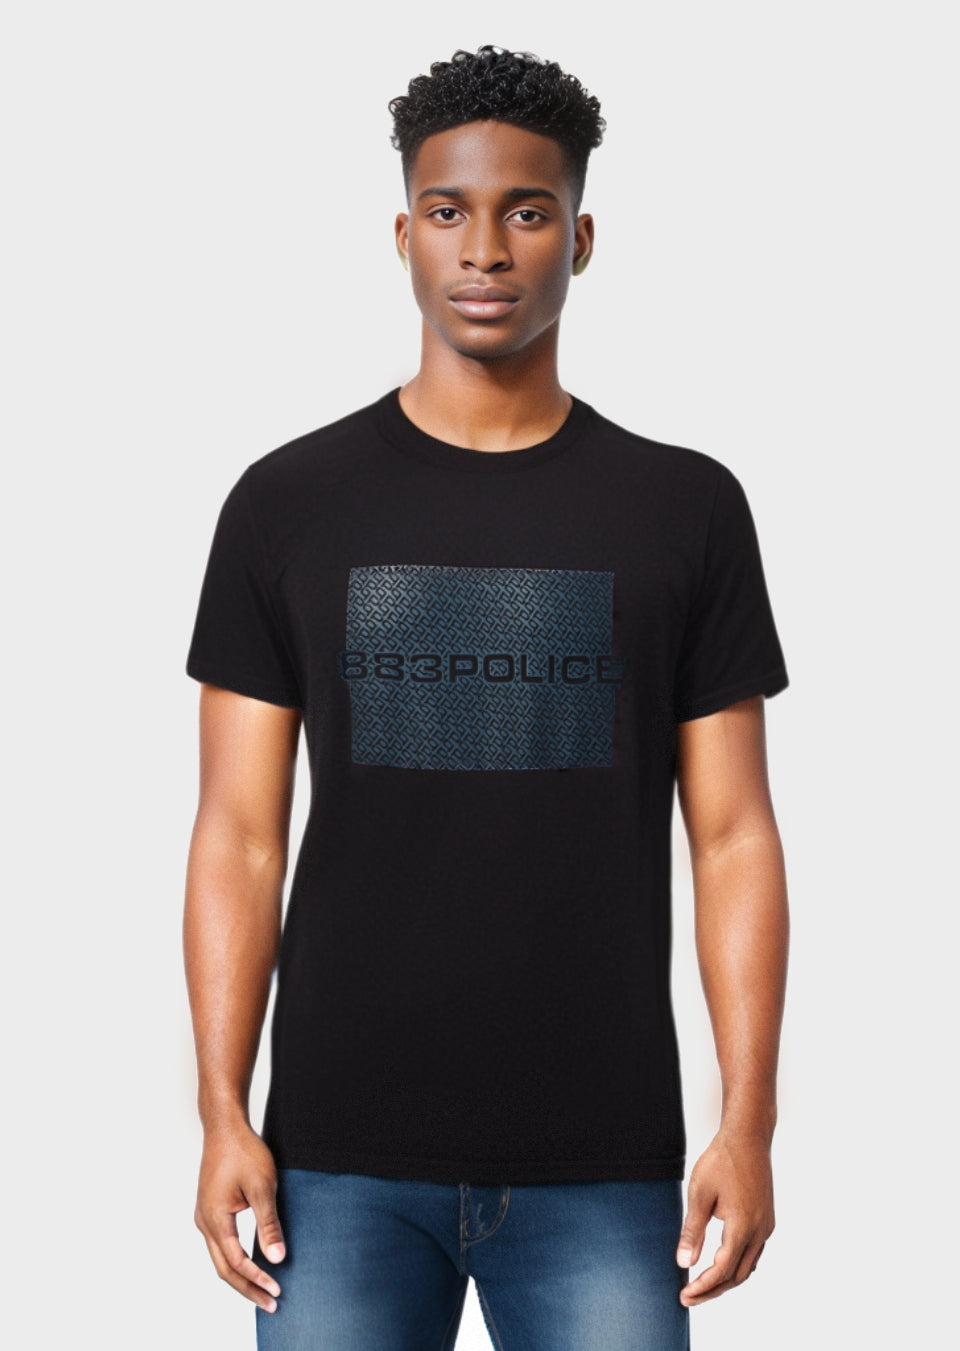 Fabio Black T-Shirt